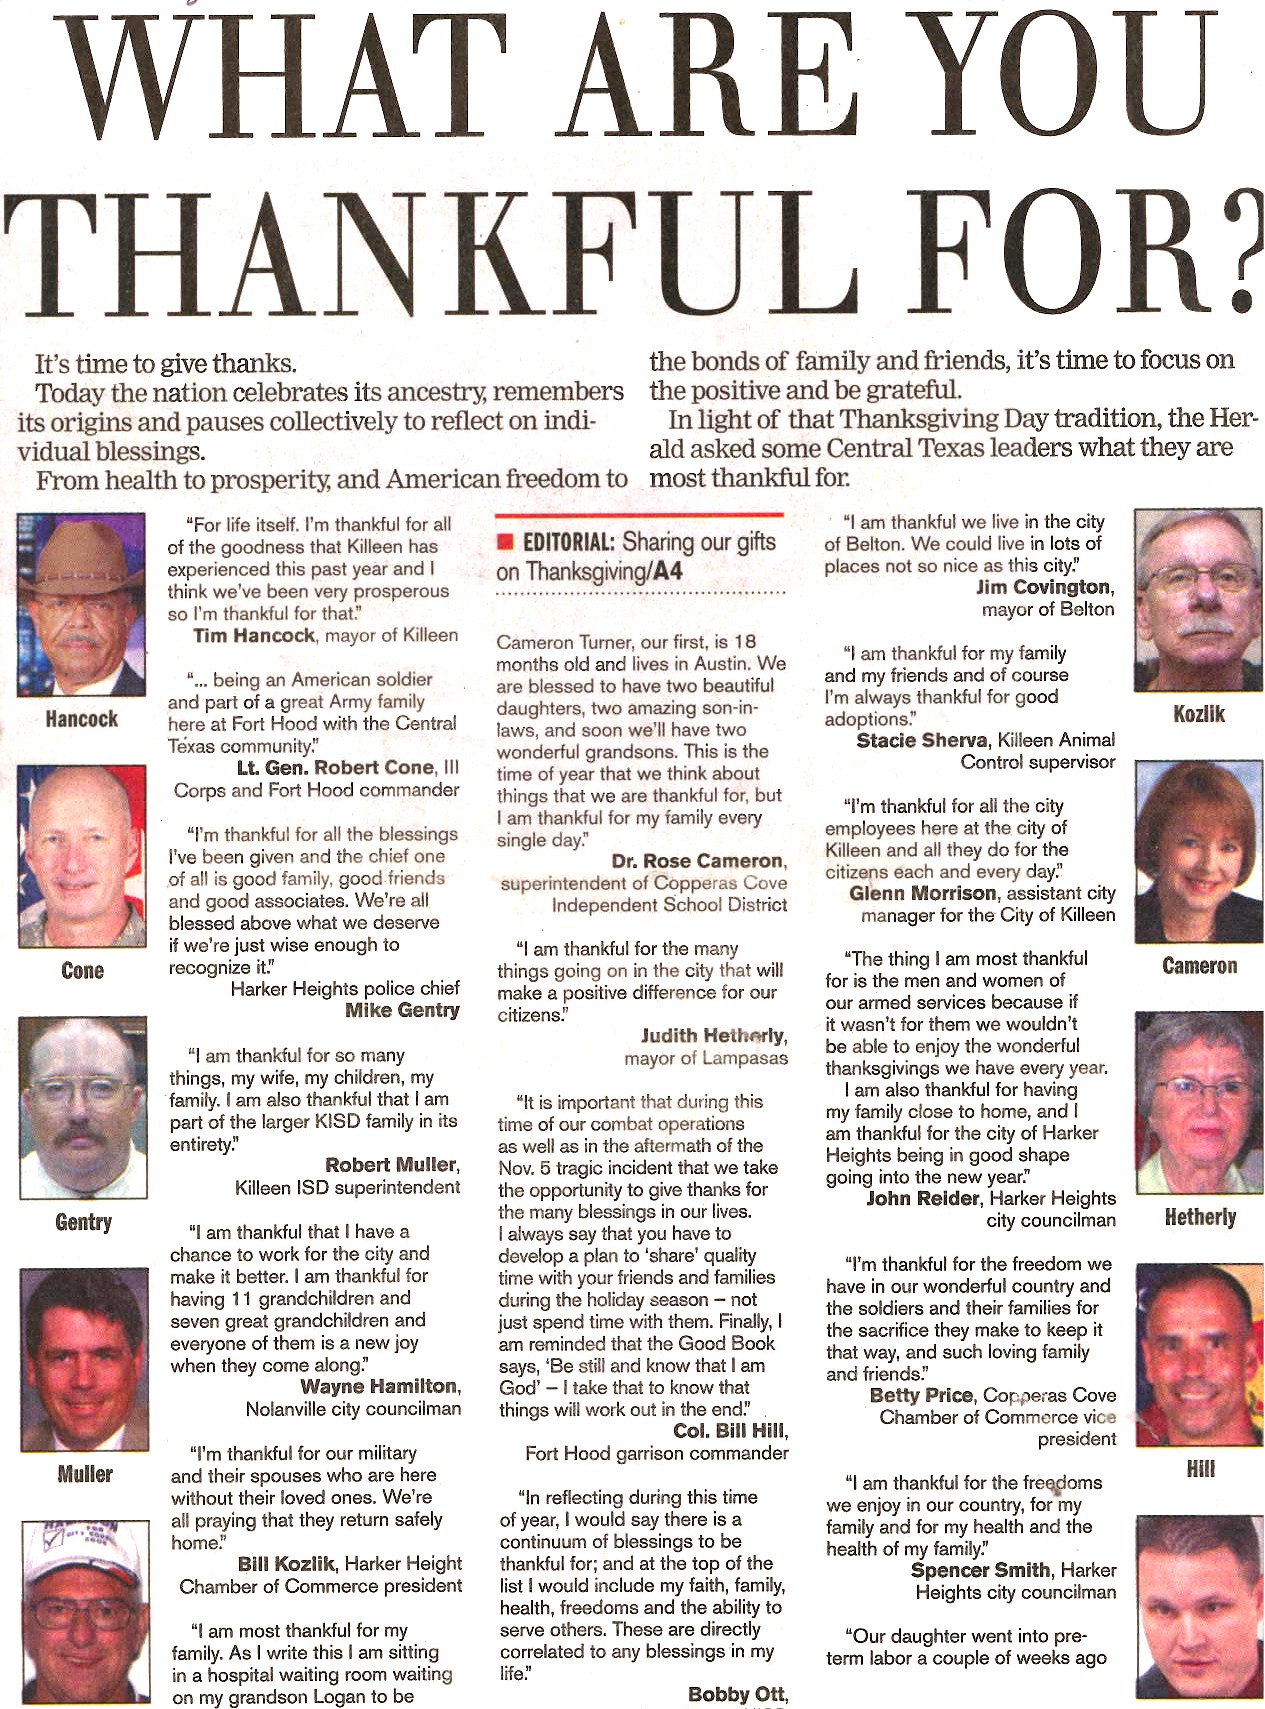 Thankfulness article